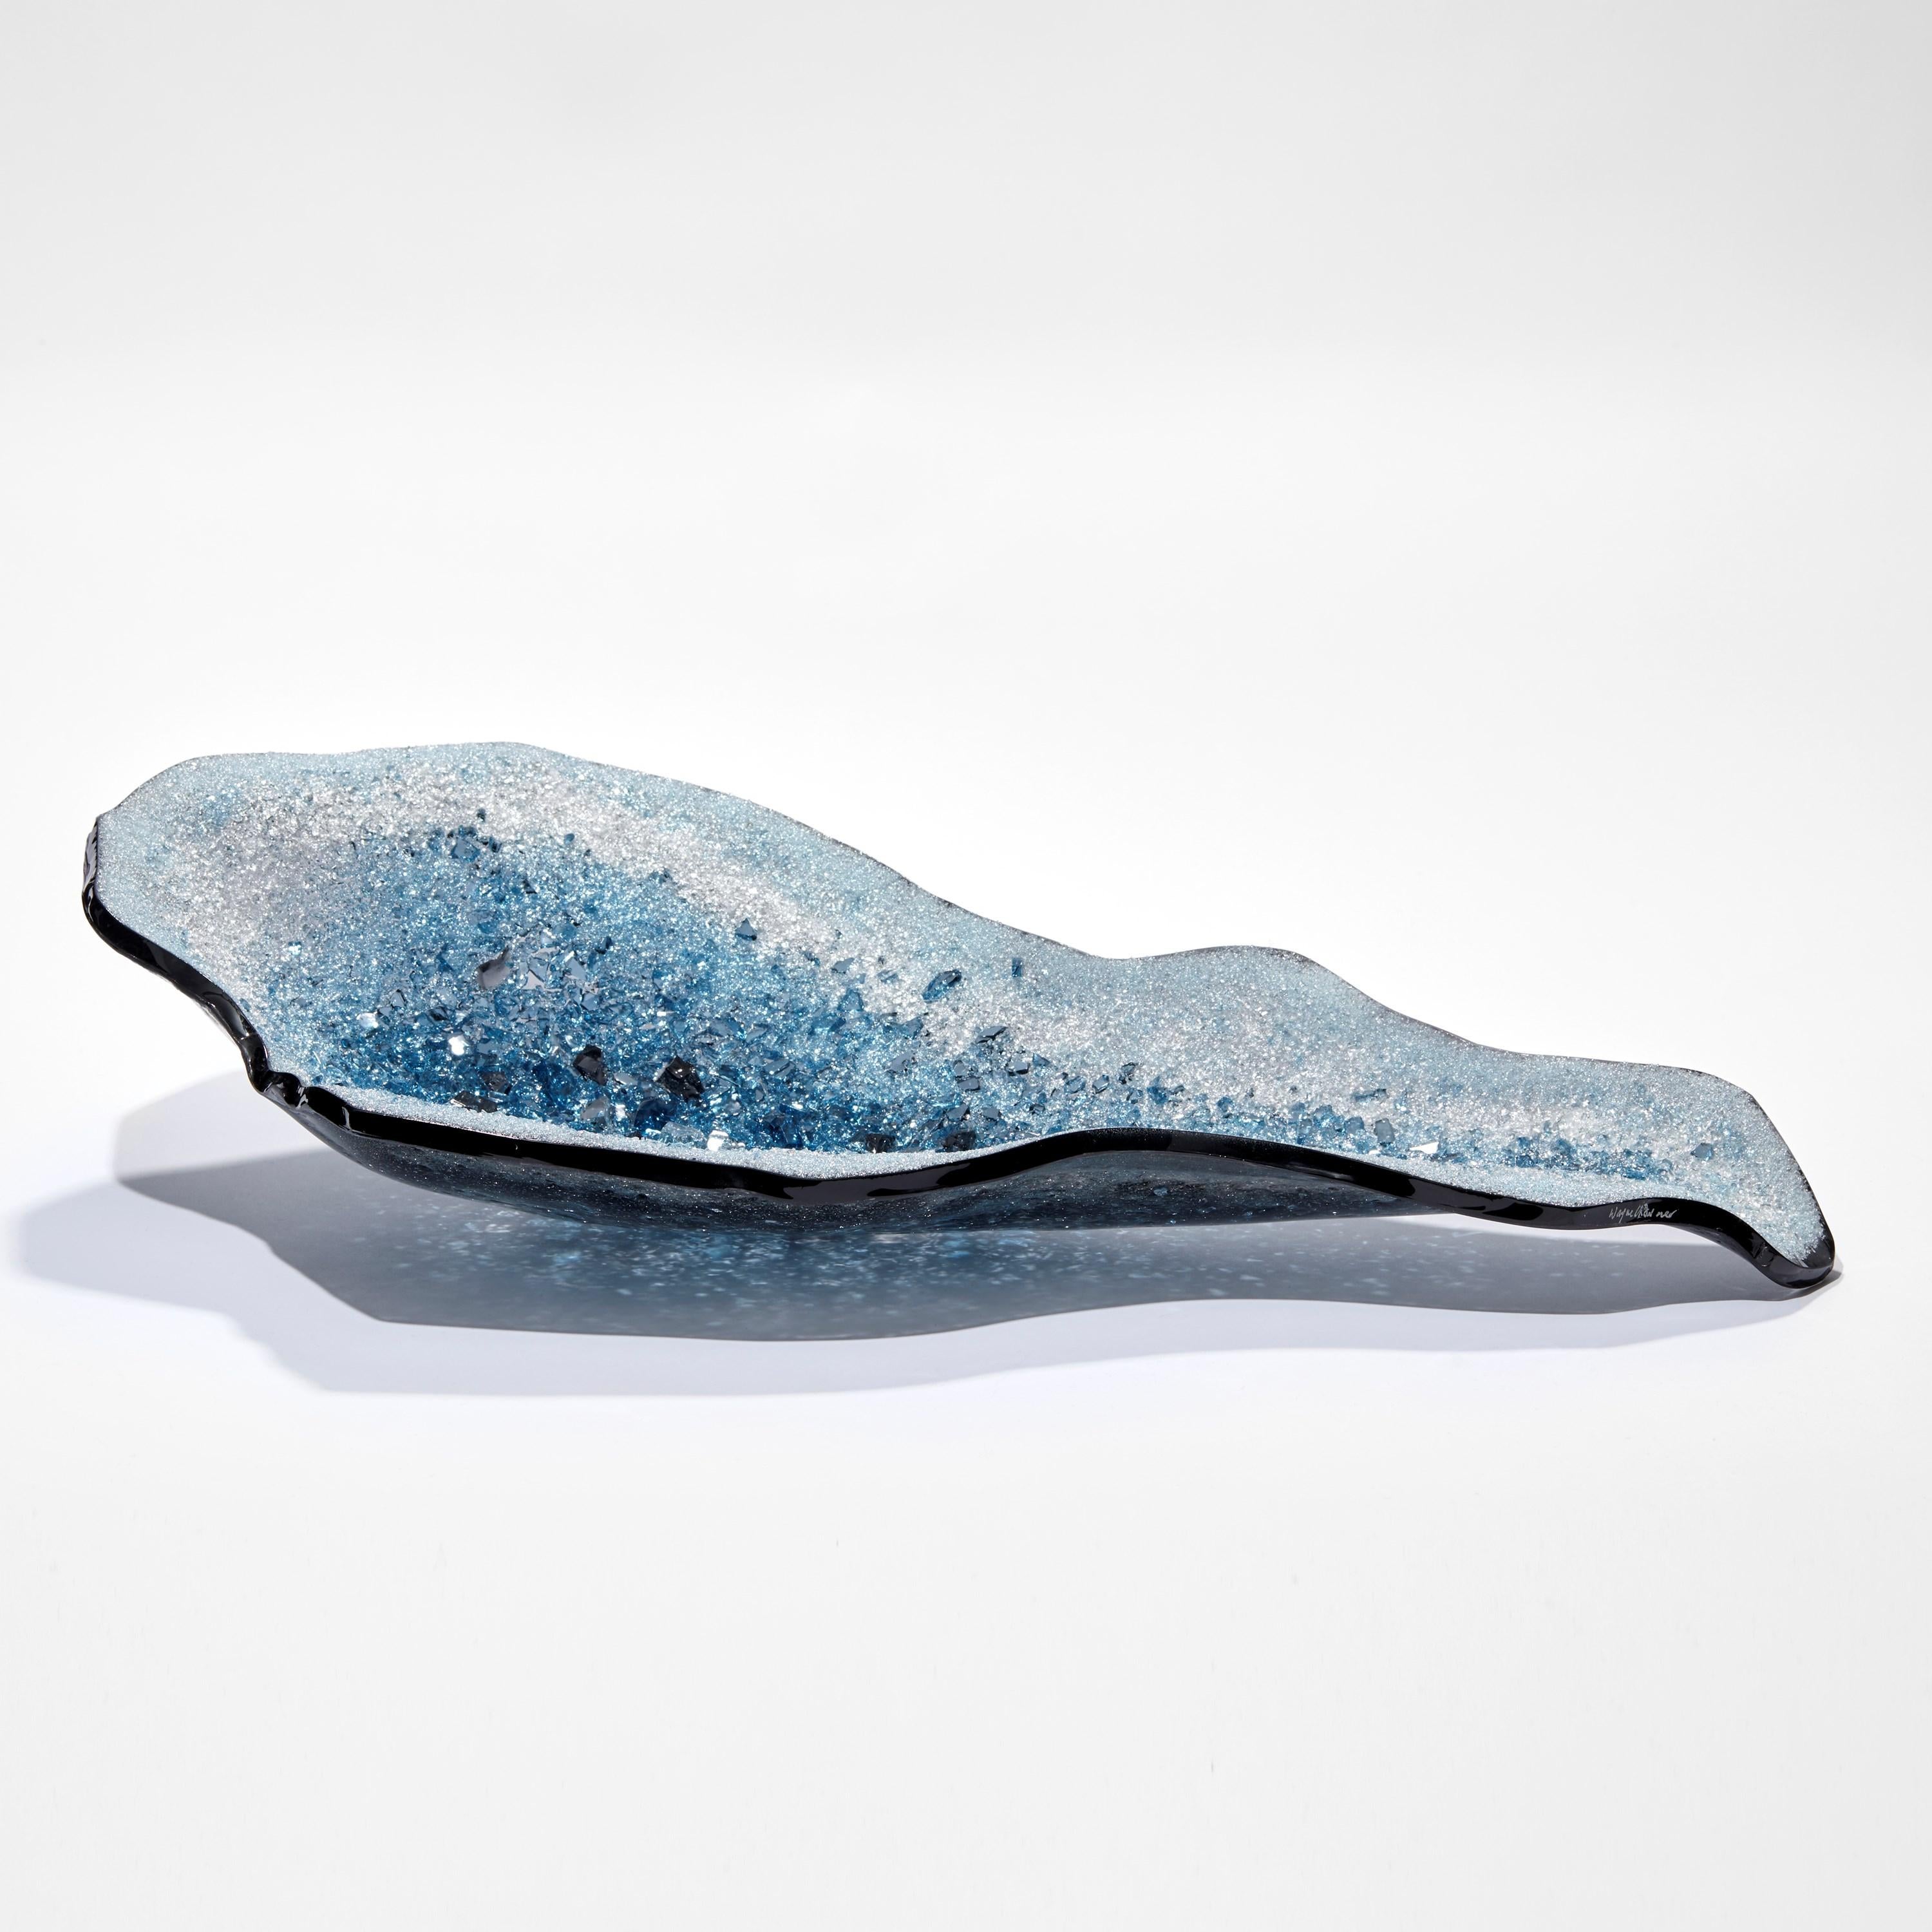 Organic Modern Celestine viii, a Blue & Turquoise Geode Theme Glass Sculpture by Wayne Charmer